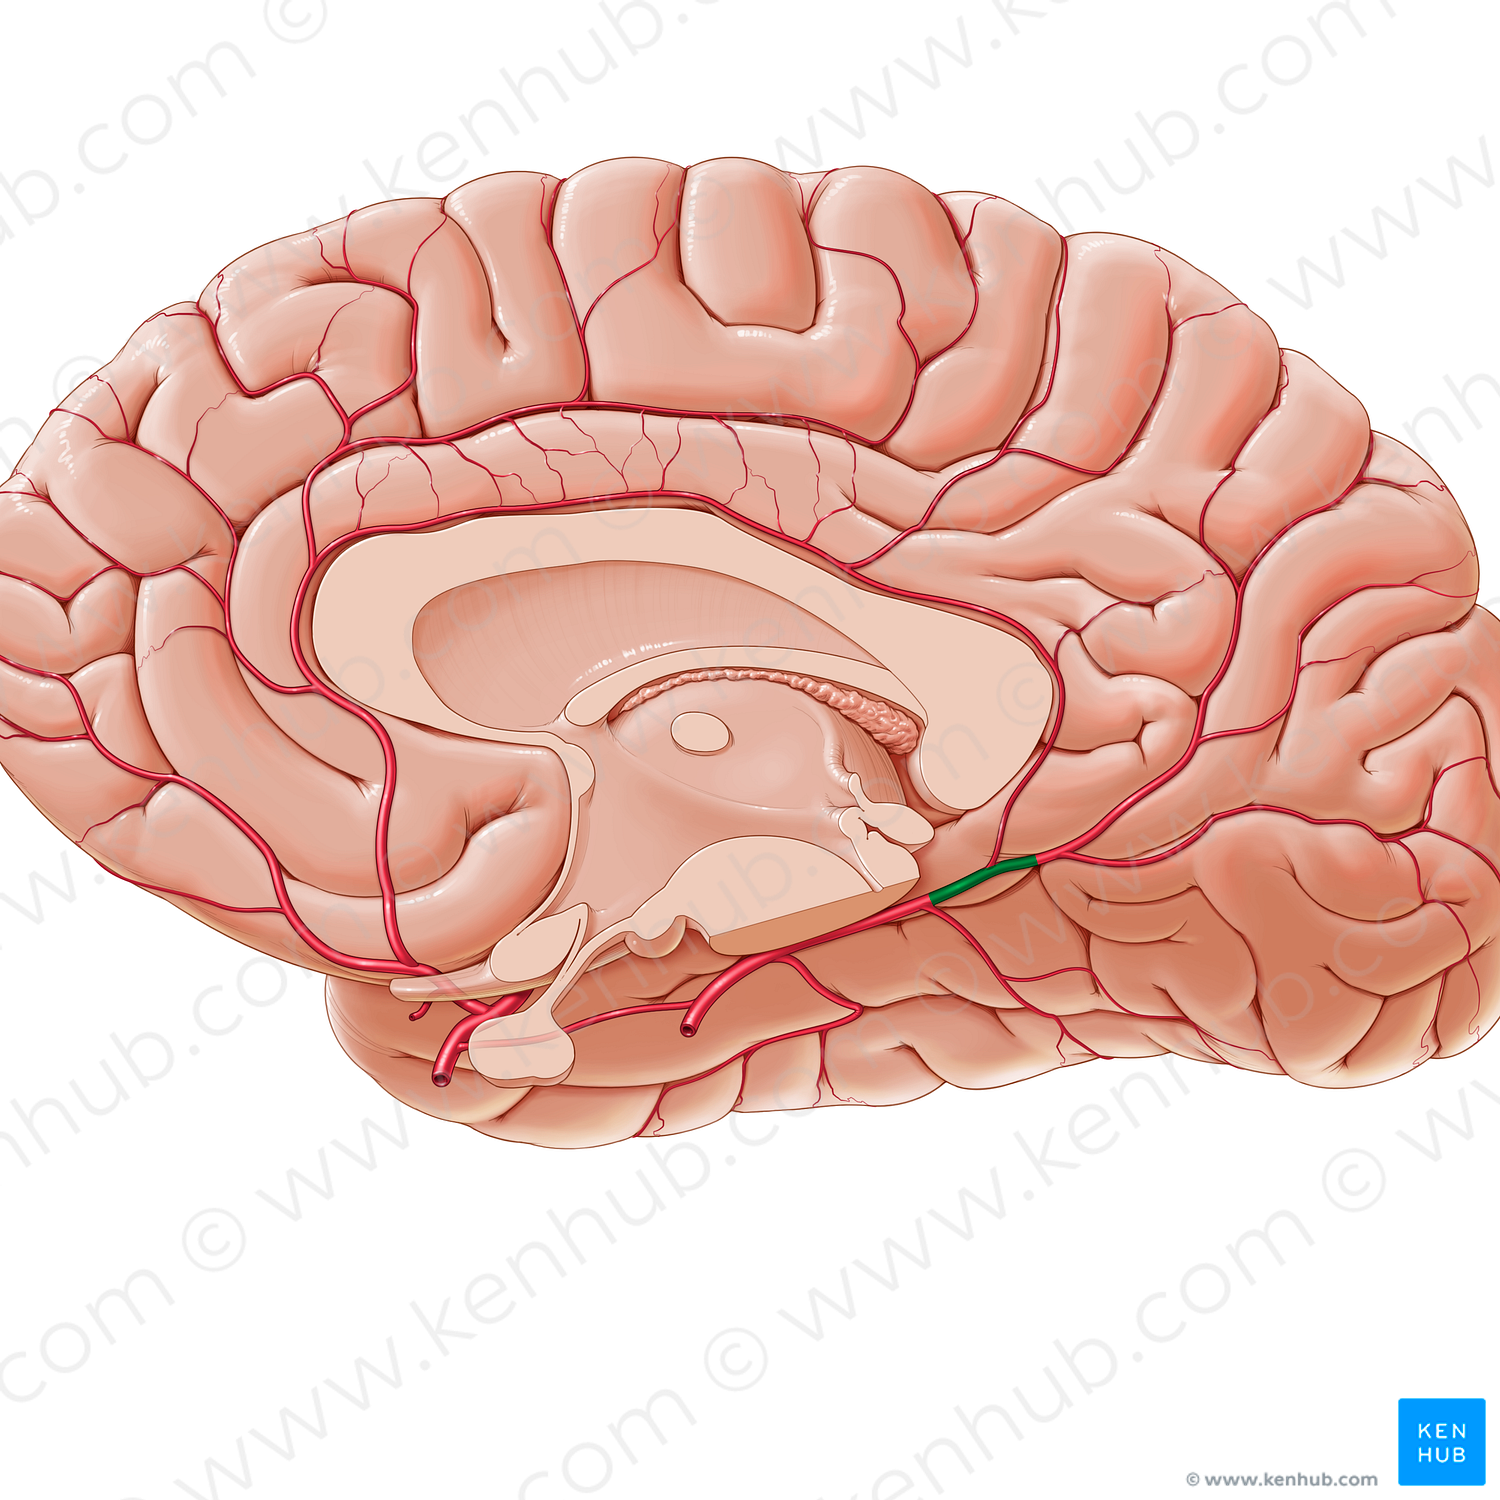 Medial occipital artery (#1566)